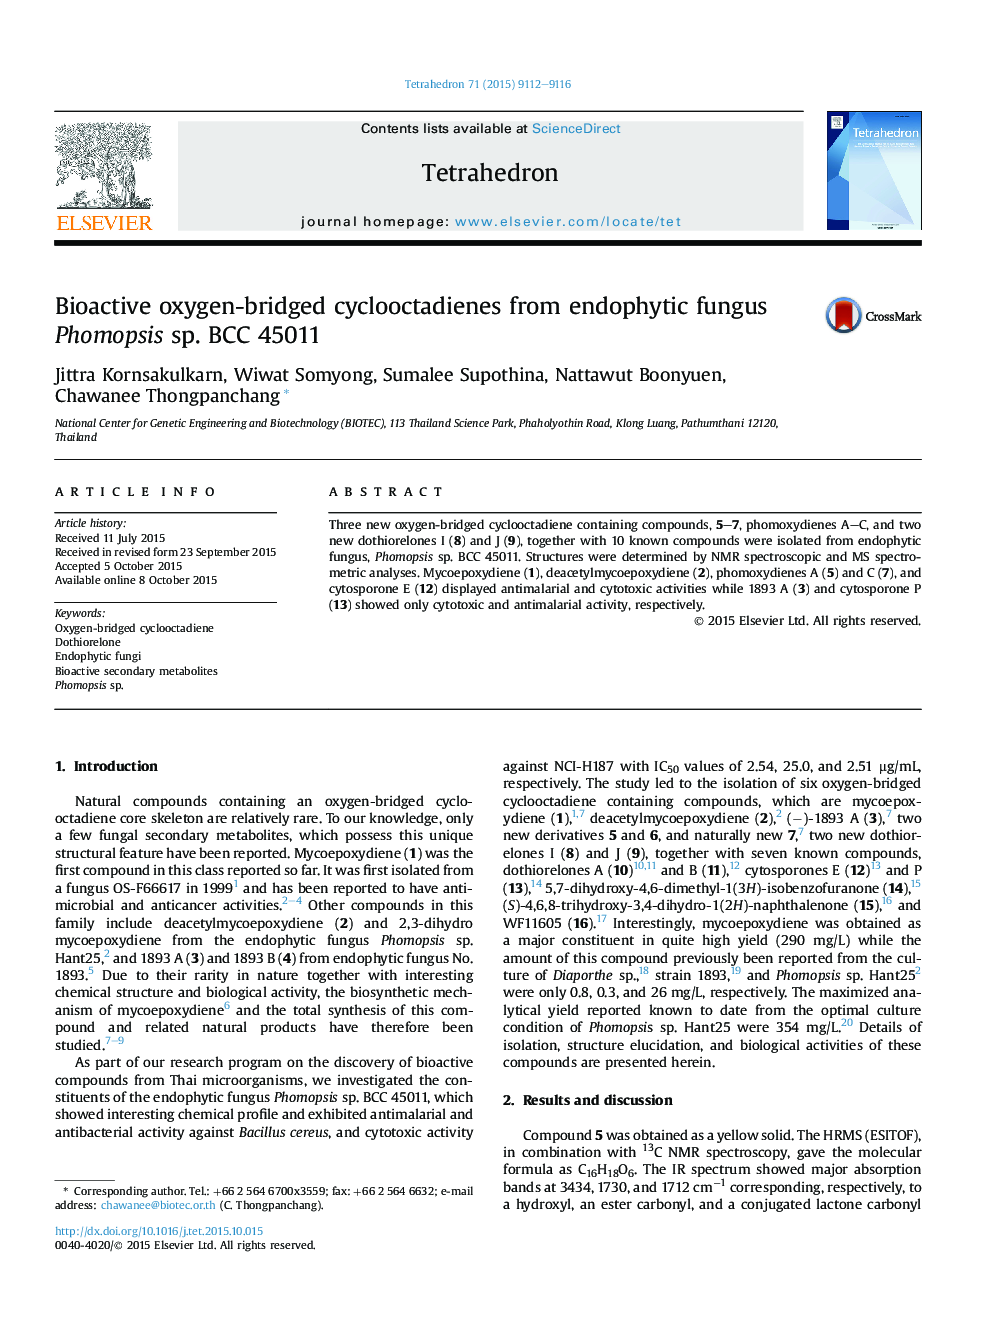 Bioactive oxygen-bridged cyclooctadienes from endophytic fungus Phomopsis sp. BCC 45011